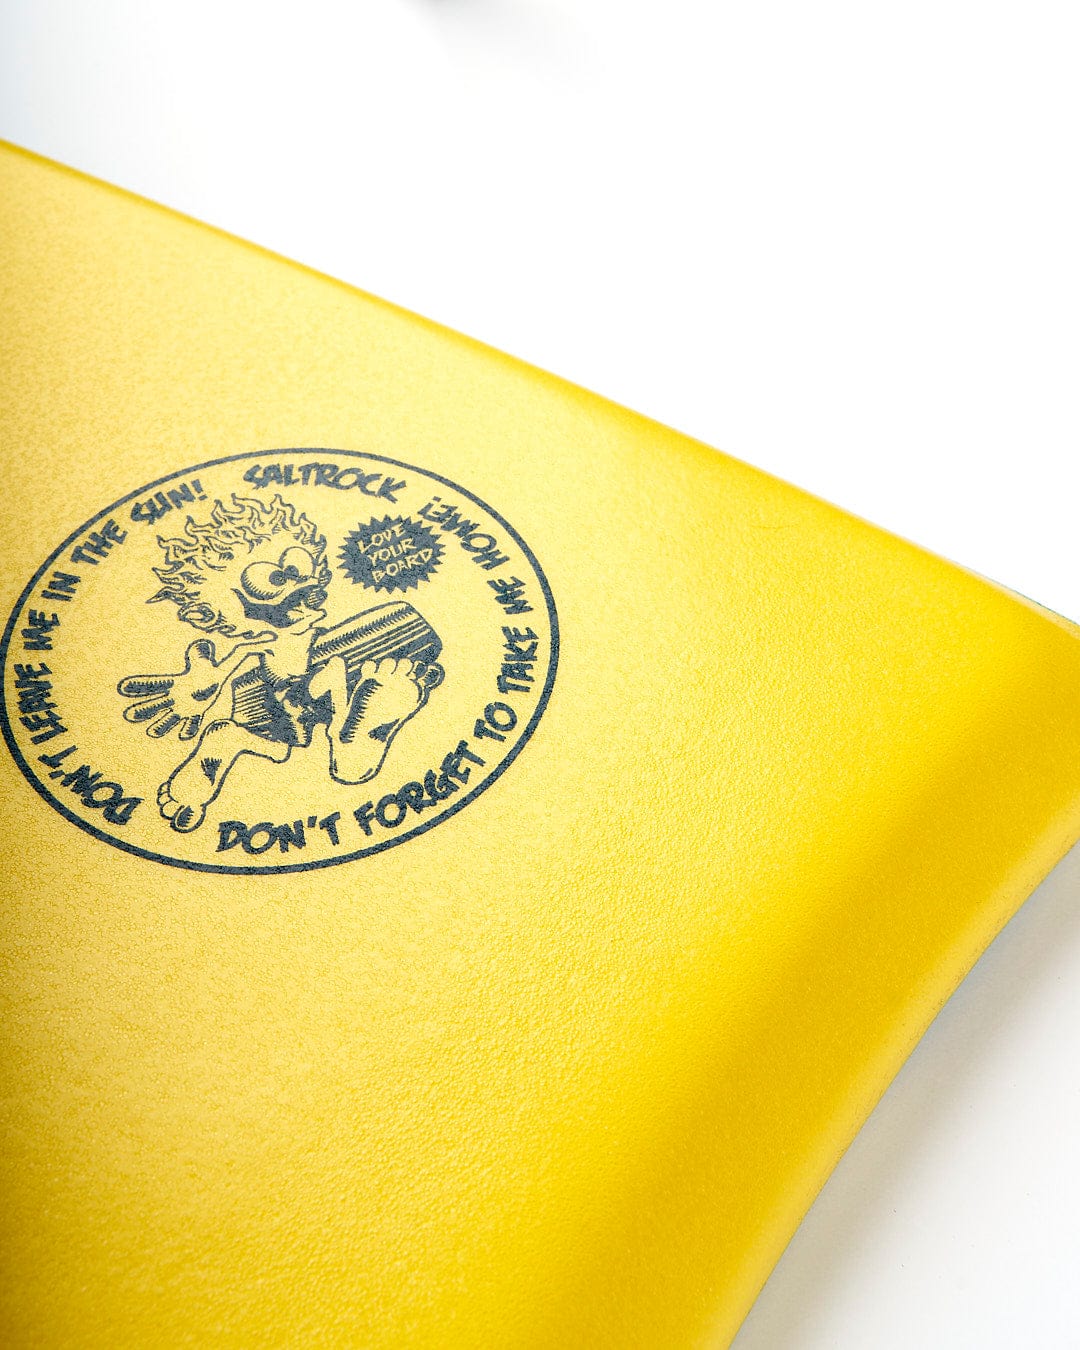 A yellow Saltrock notebook with a Warp 37" Bodyboard - Blue logo on it.